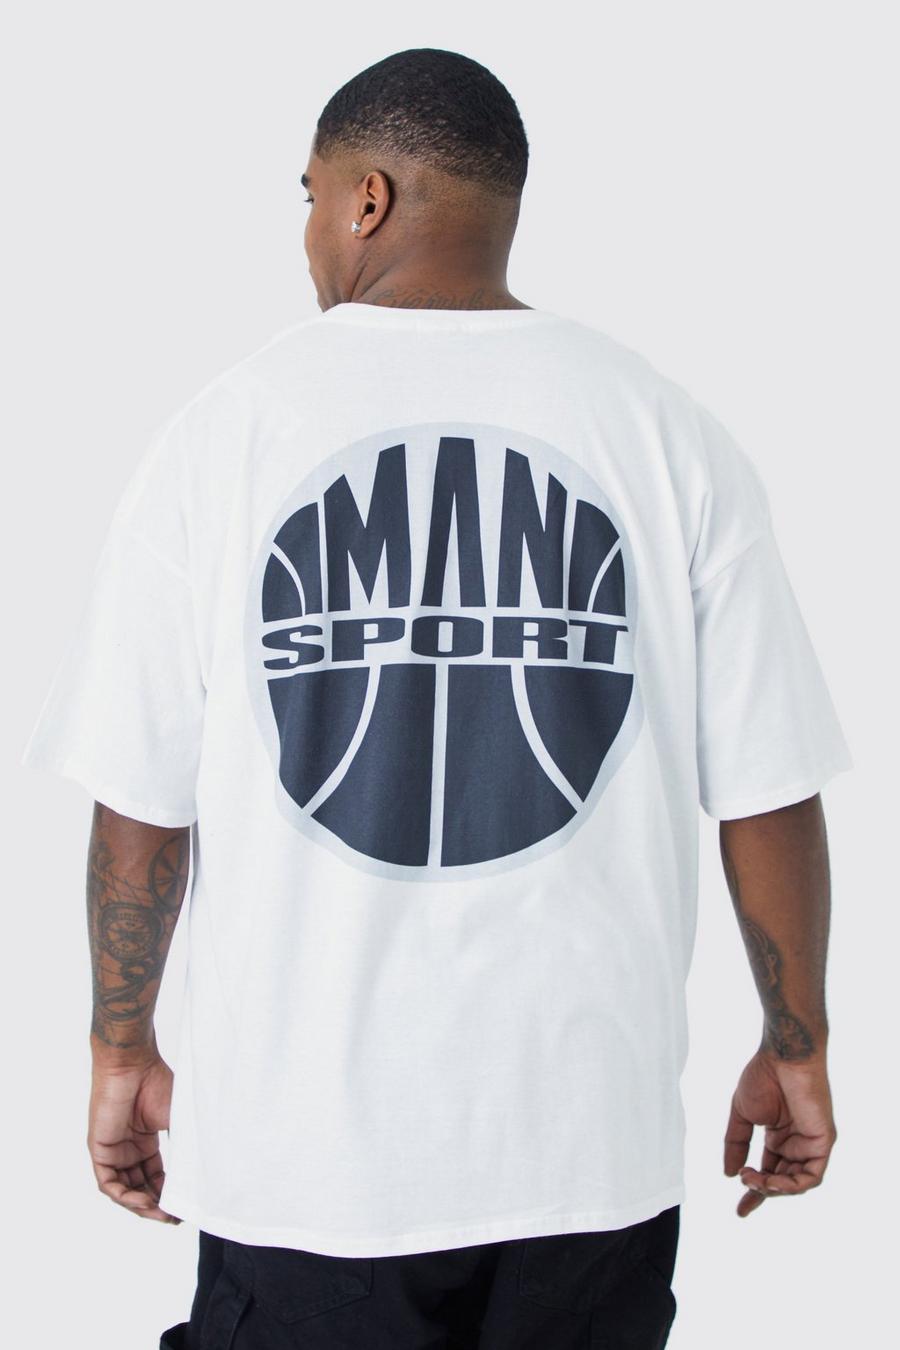 T-shirt Plus Size con stampa Man Sport sul retro, White image number 1